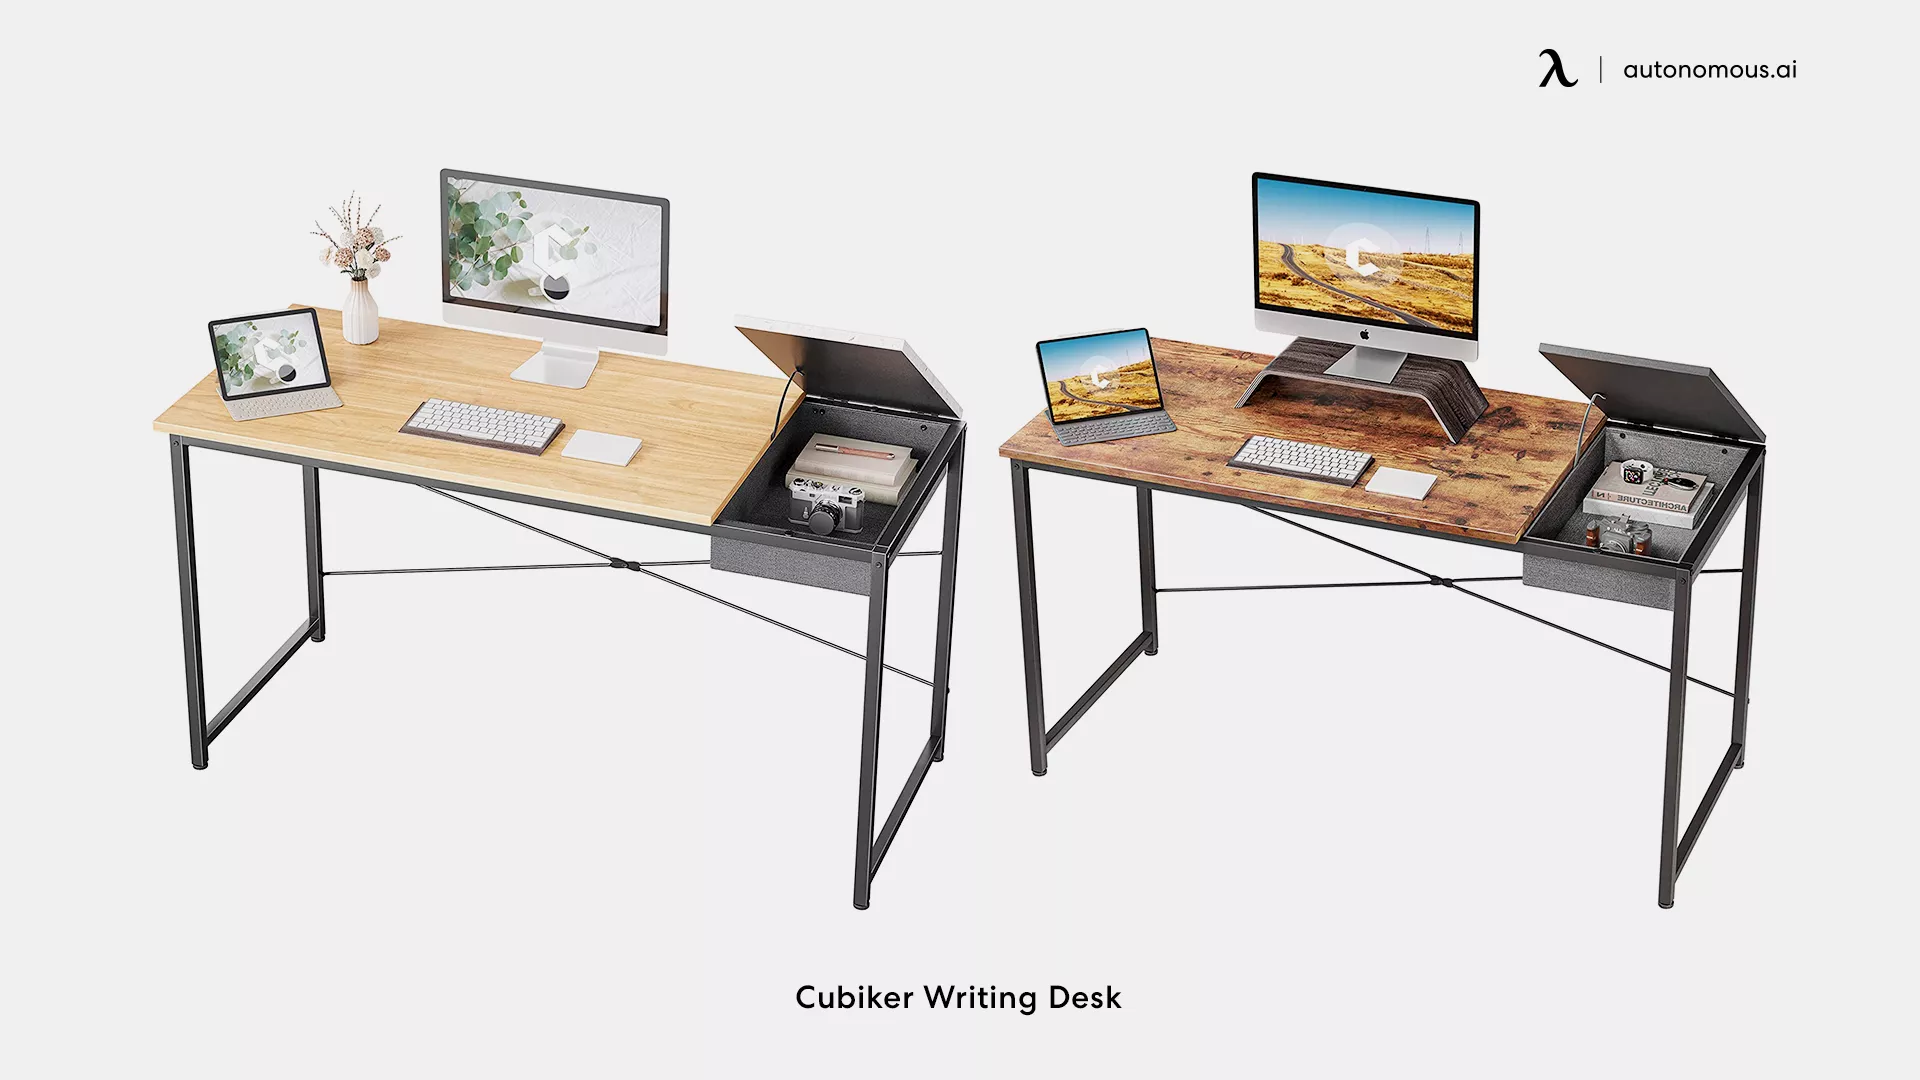 Cubiker Writing Desk